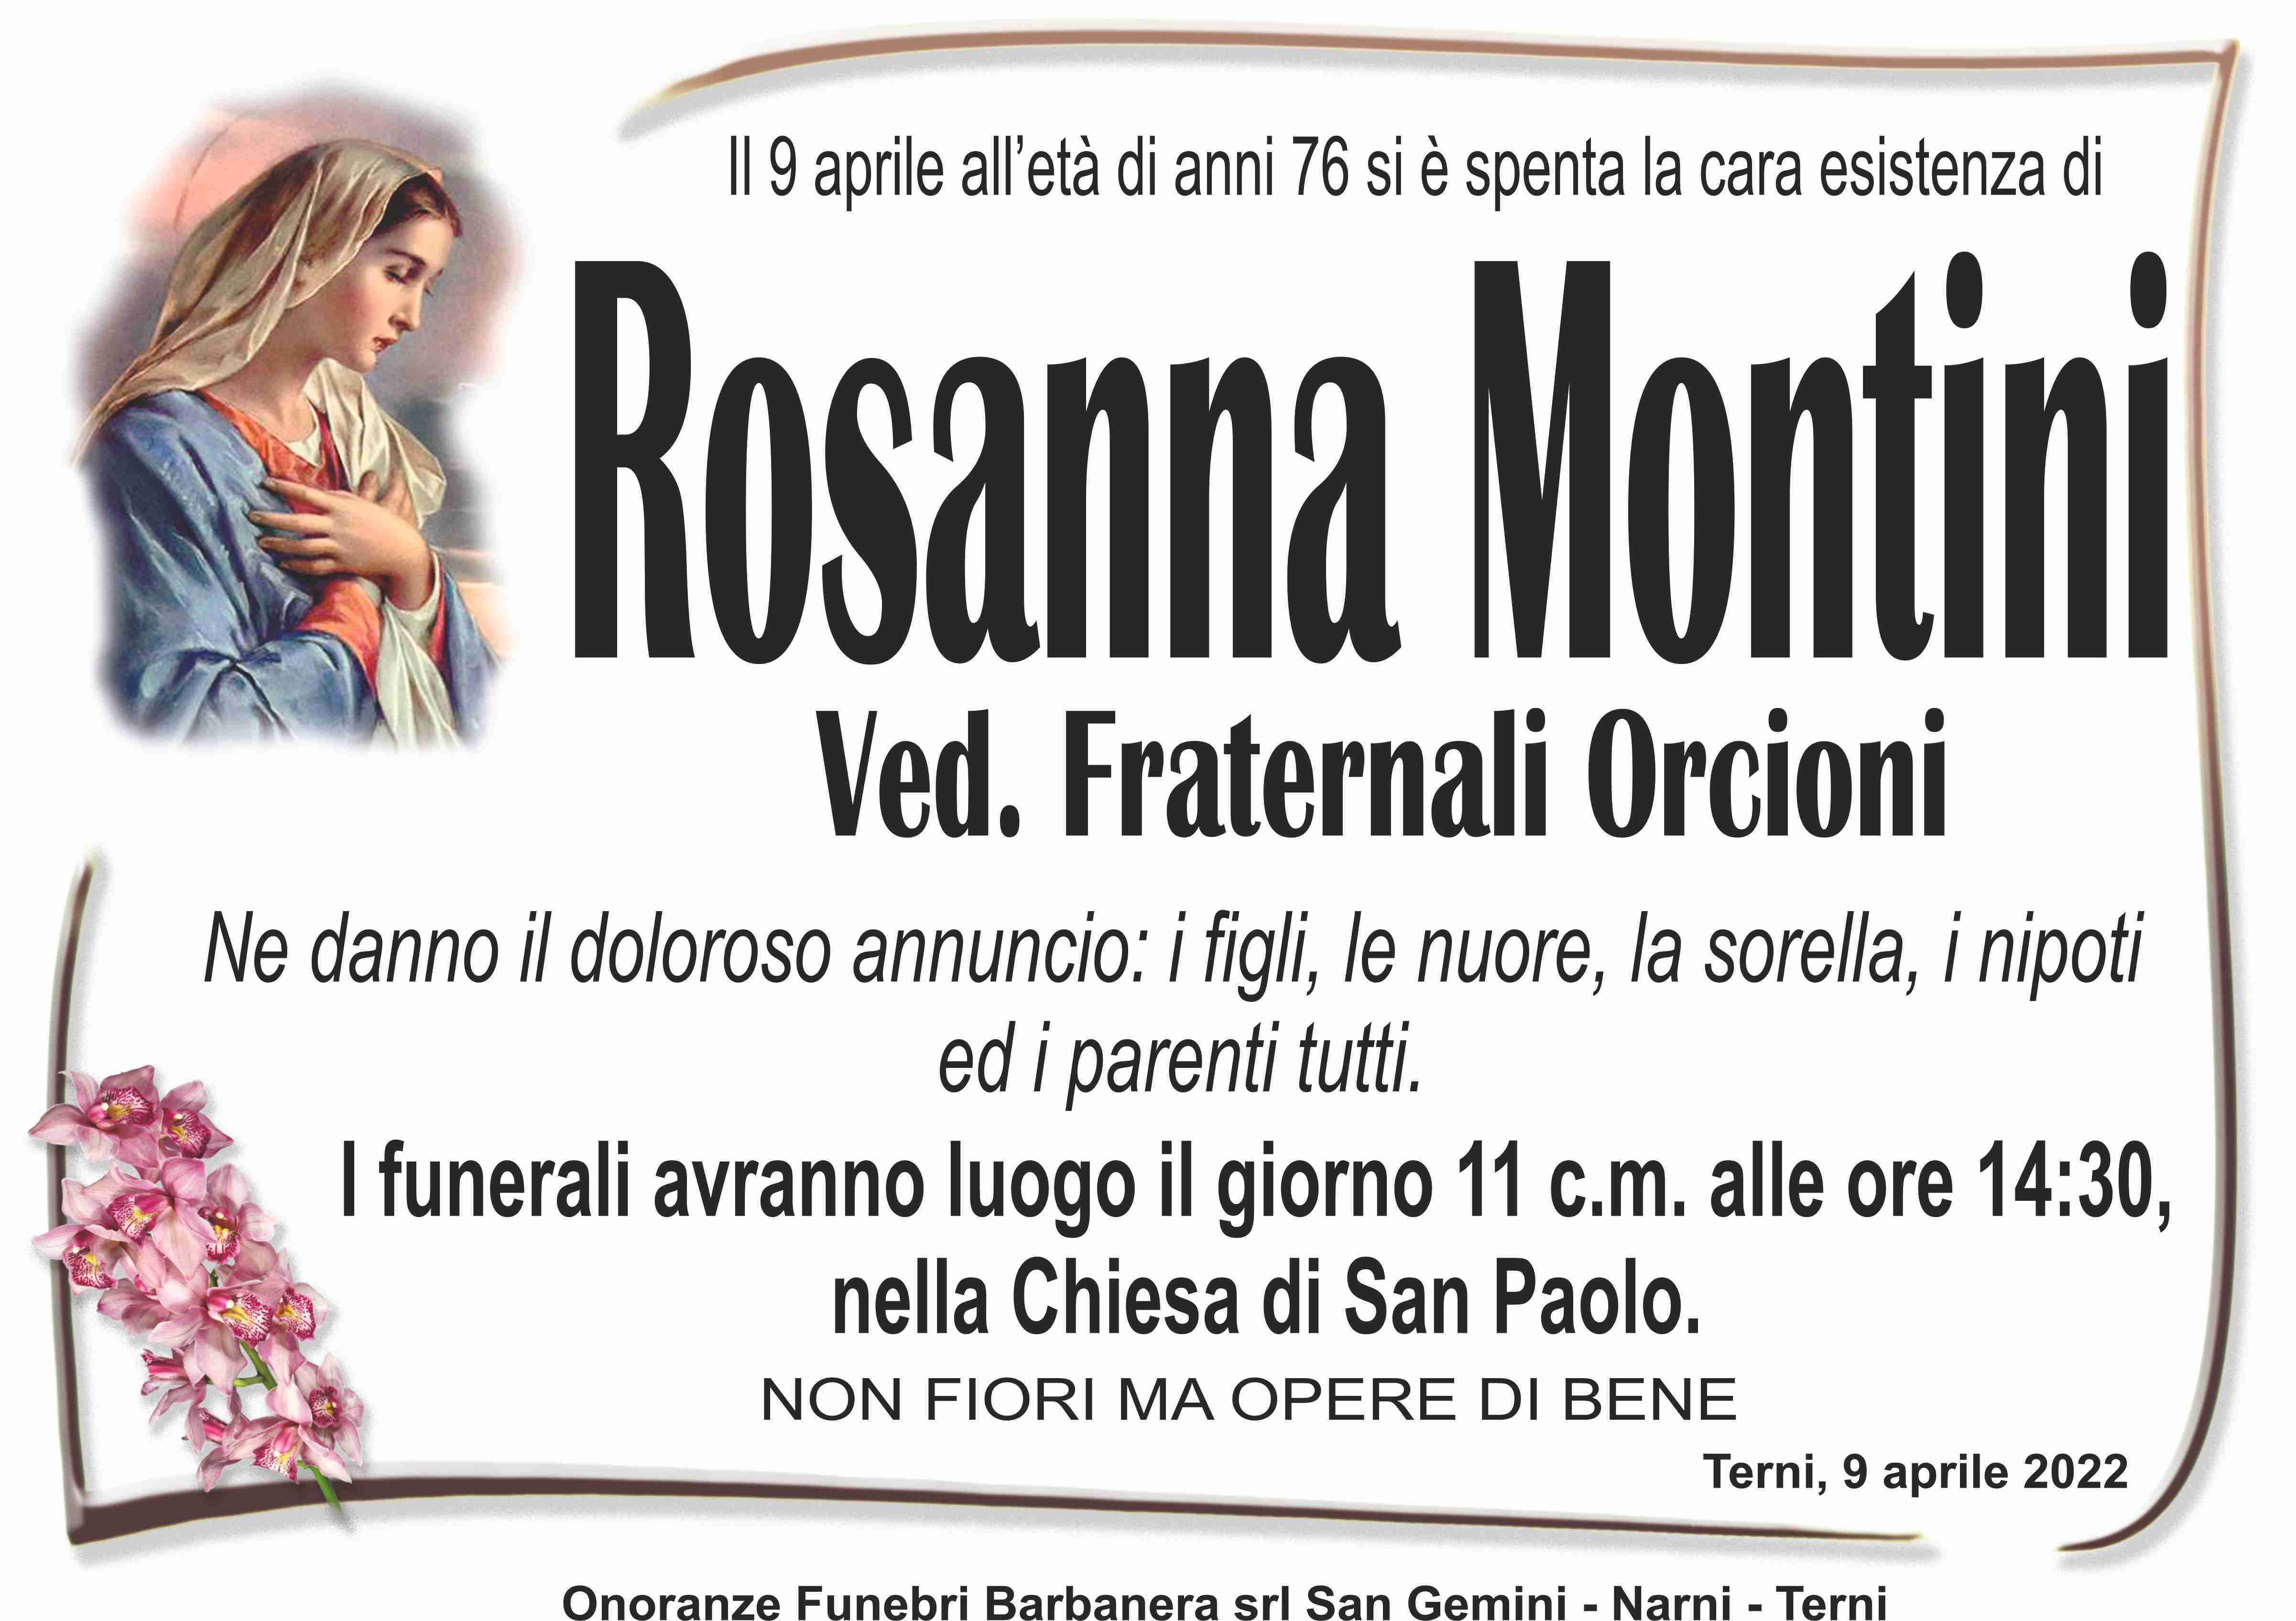 Rosanna Montini